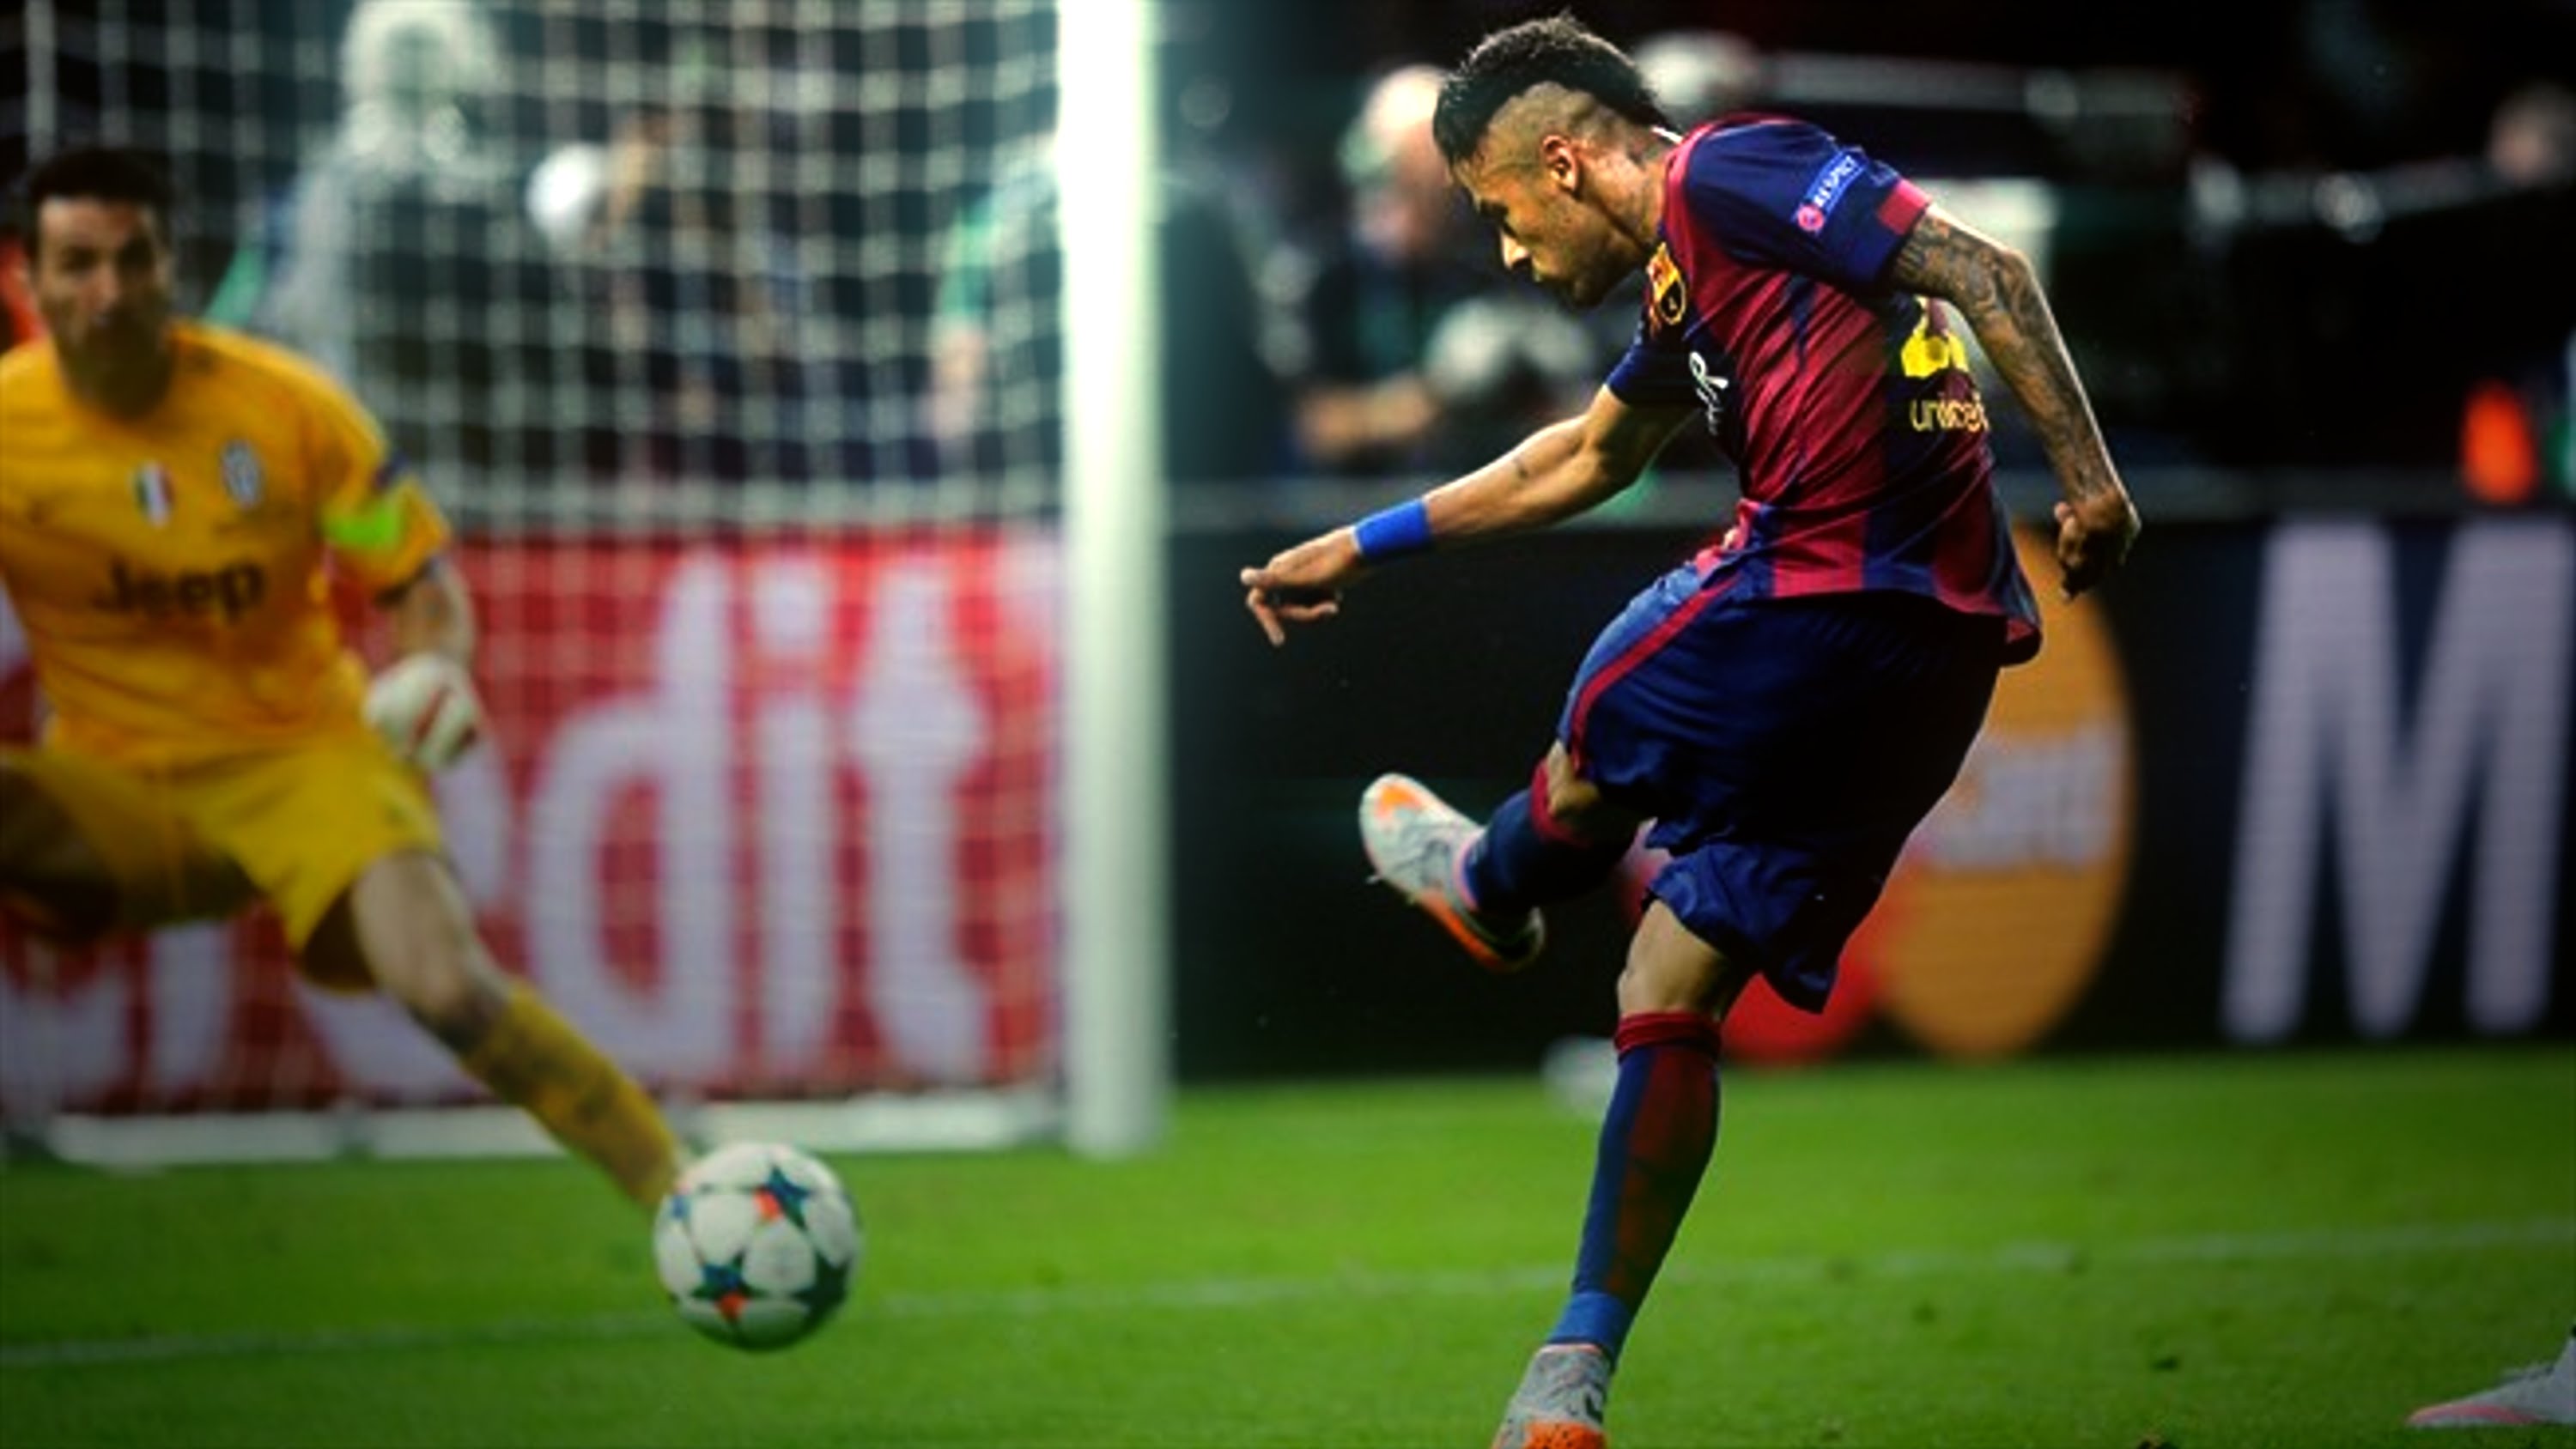 Free Neymar Football Soccer Player Hd Kick Ball To Goal Mobile Desktop Bakground Download Wallpaper Photos